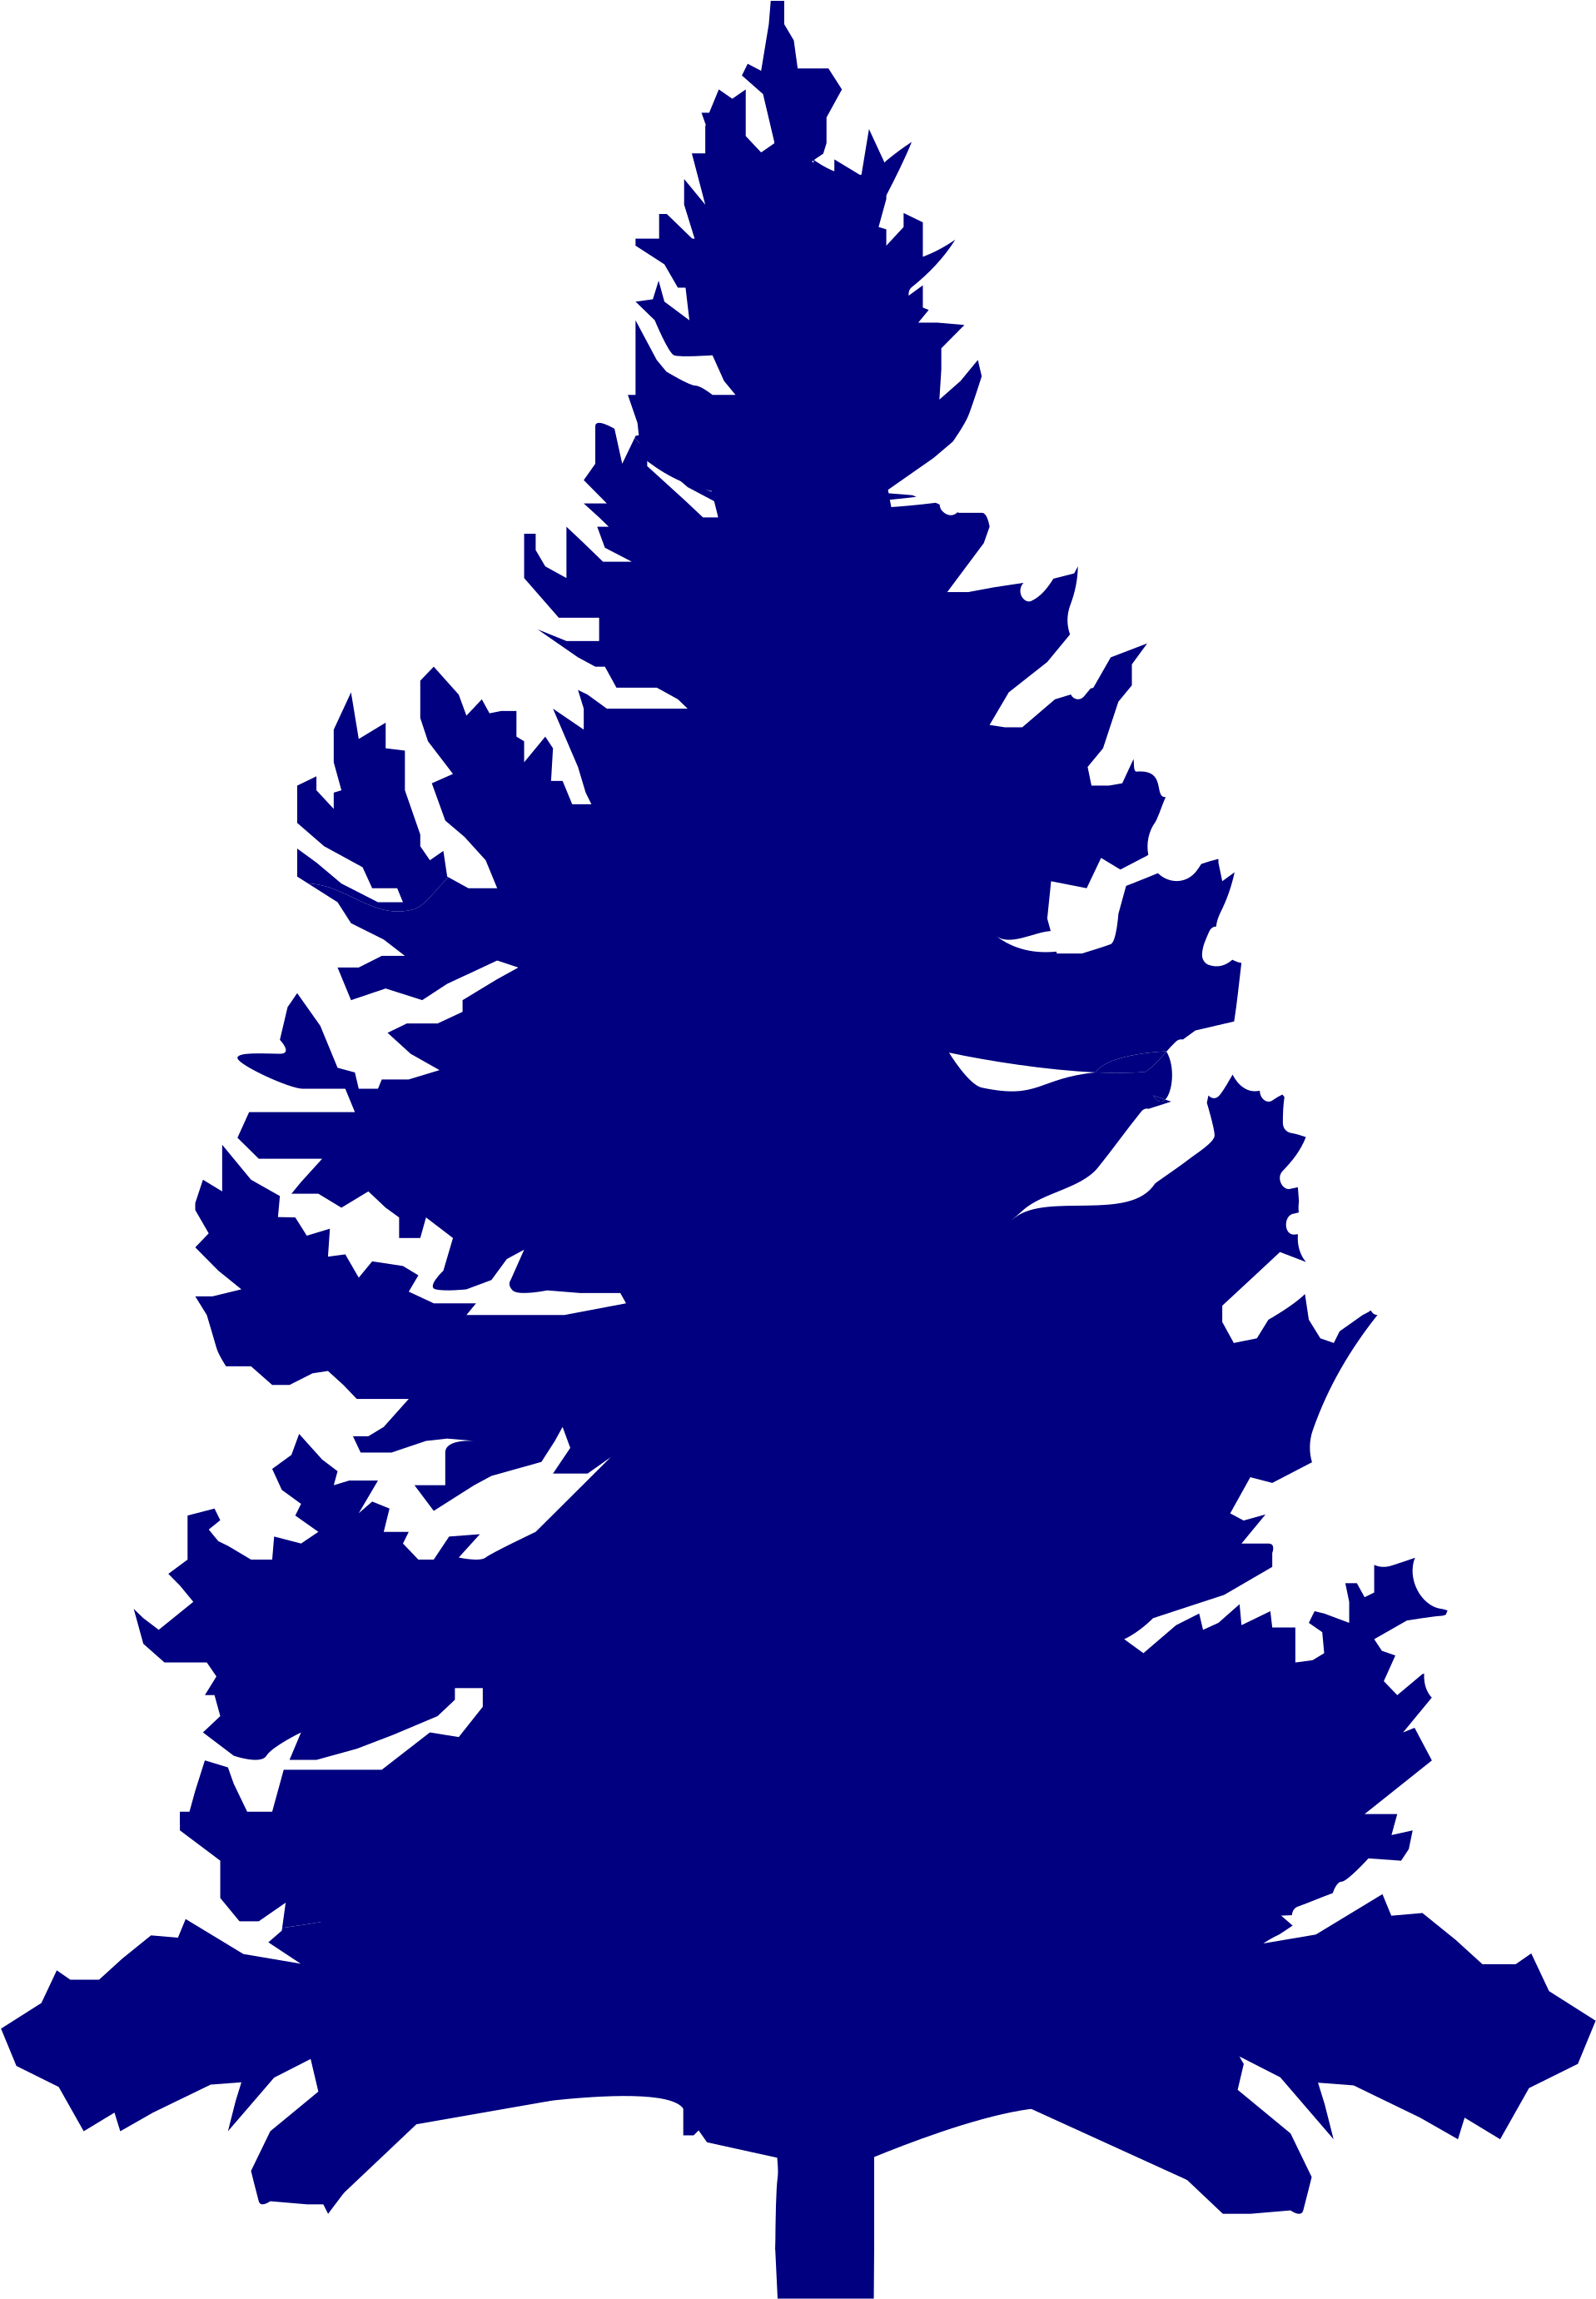 Pine Tree Graphic 25, - Education (2000x2840)